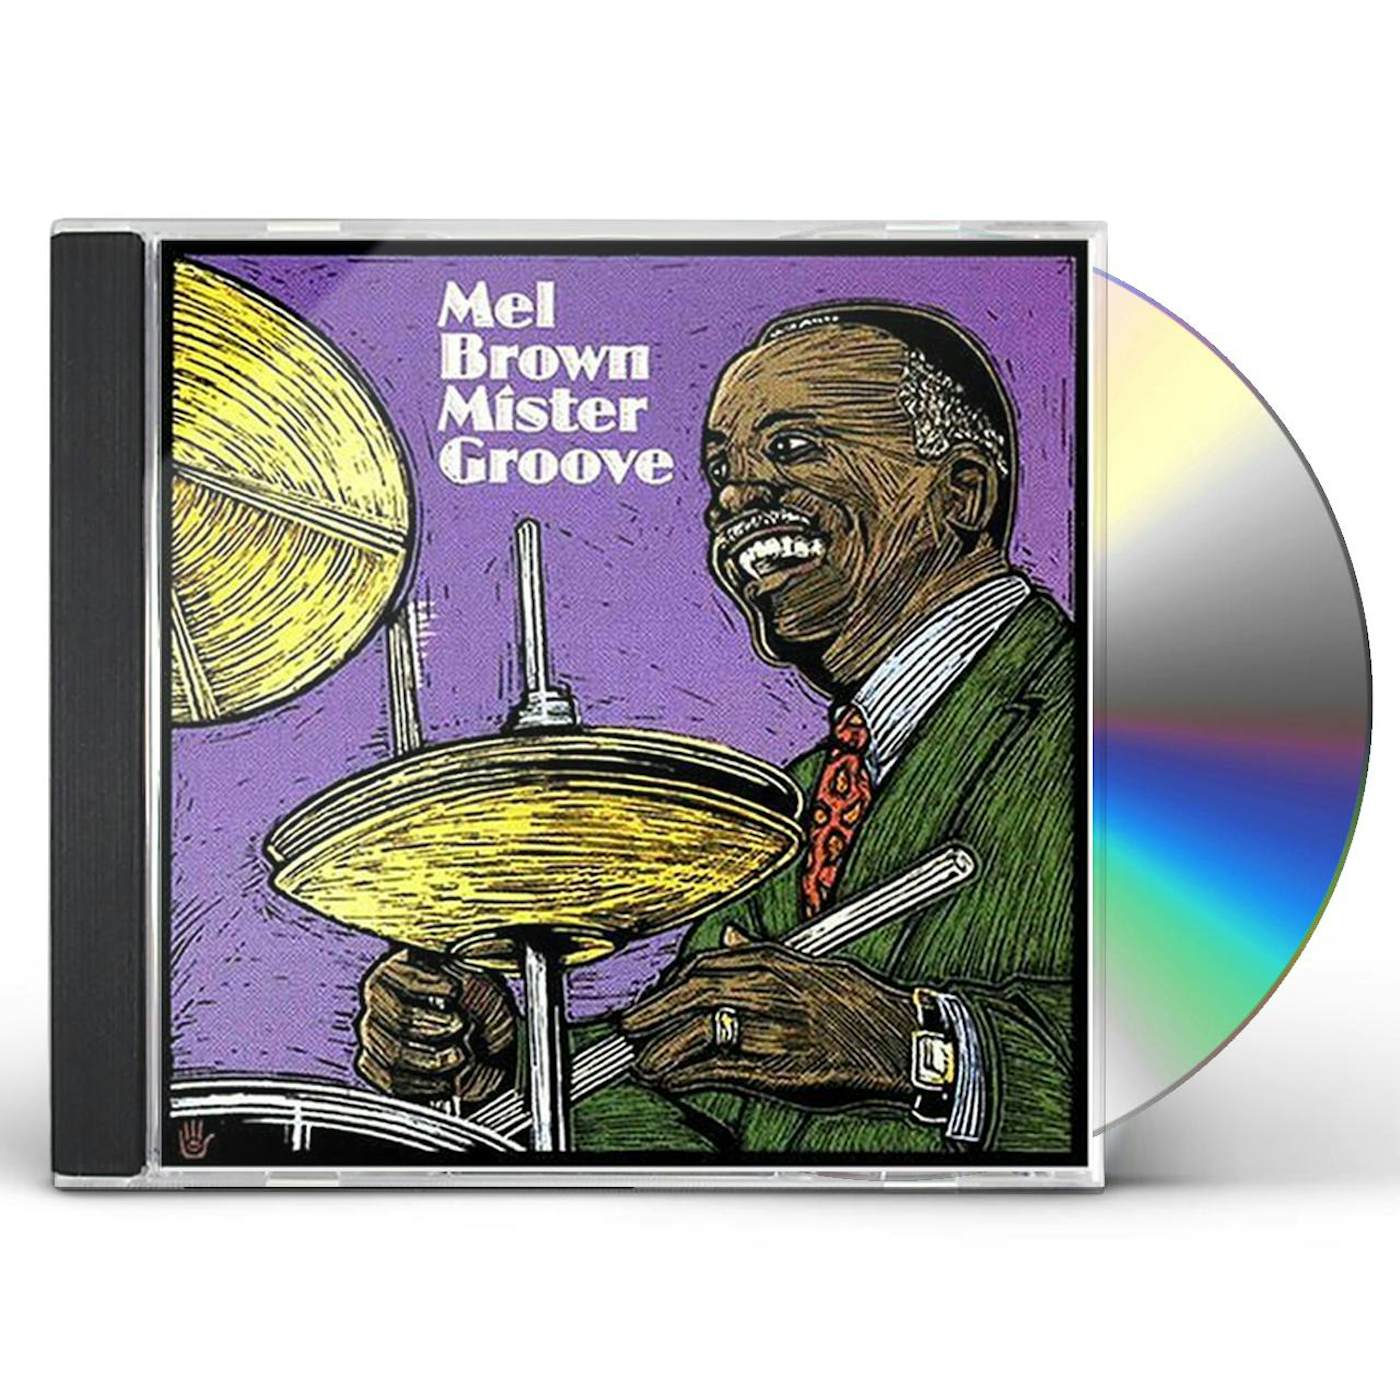 Mel Brown MISTER GROOVE CD